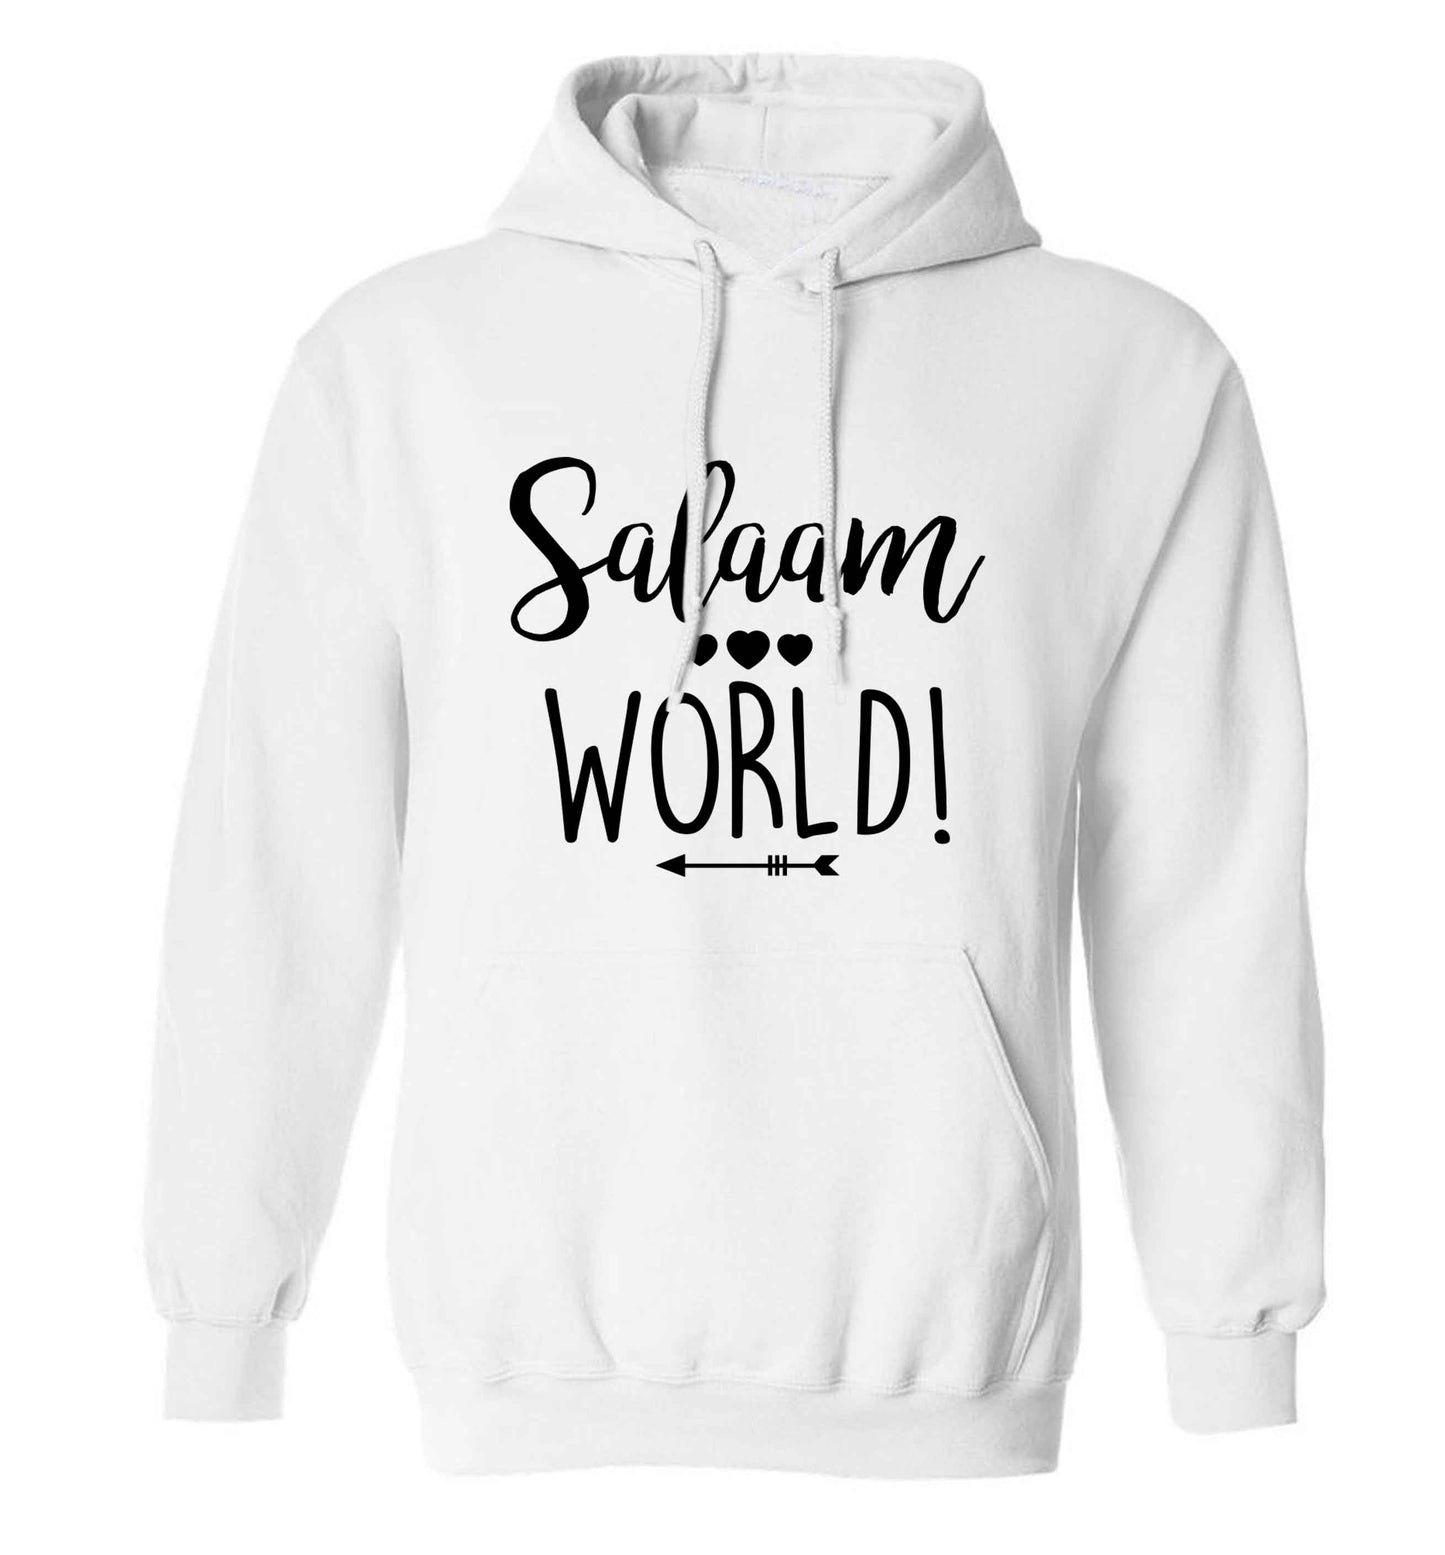 Salaam world adults unisex white hoodie 2XL